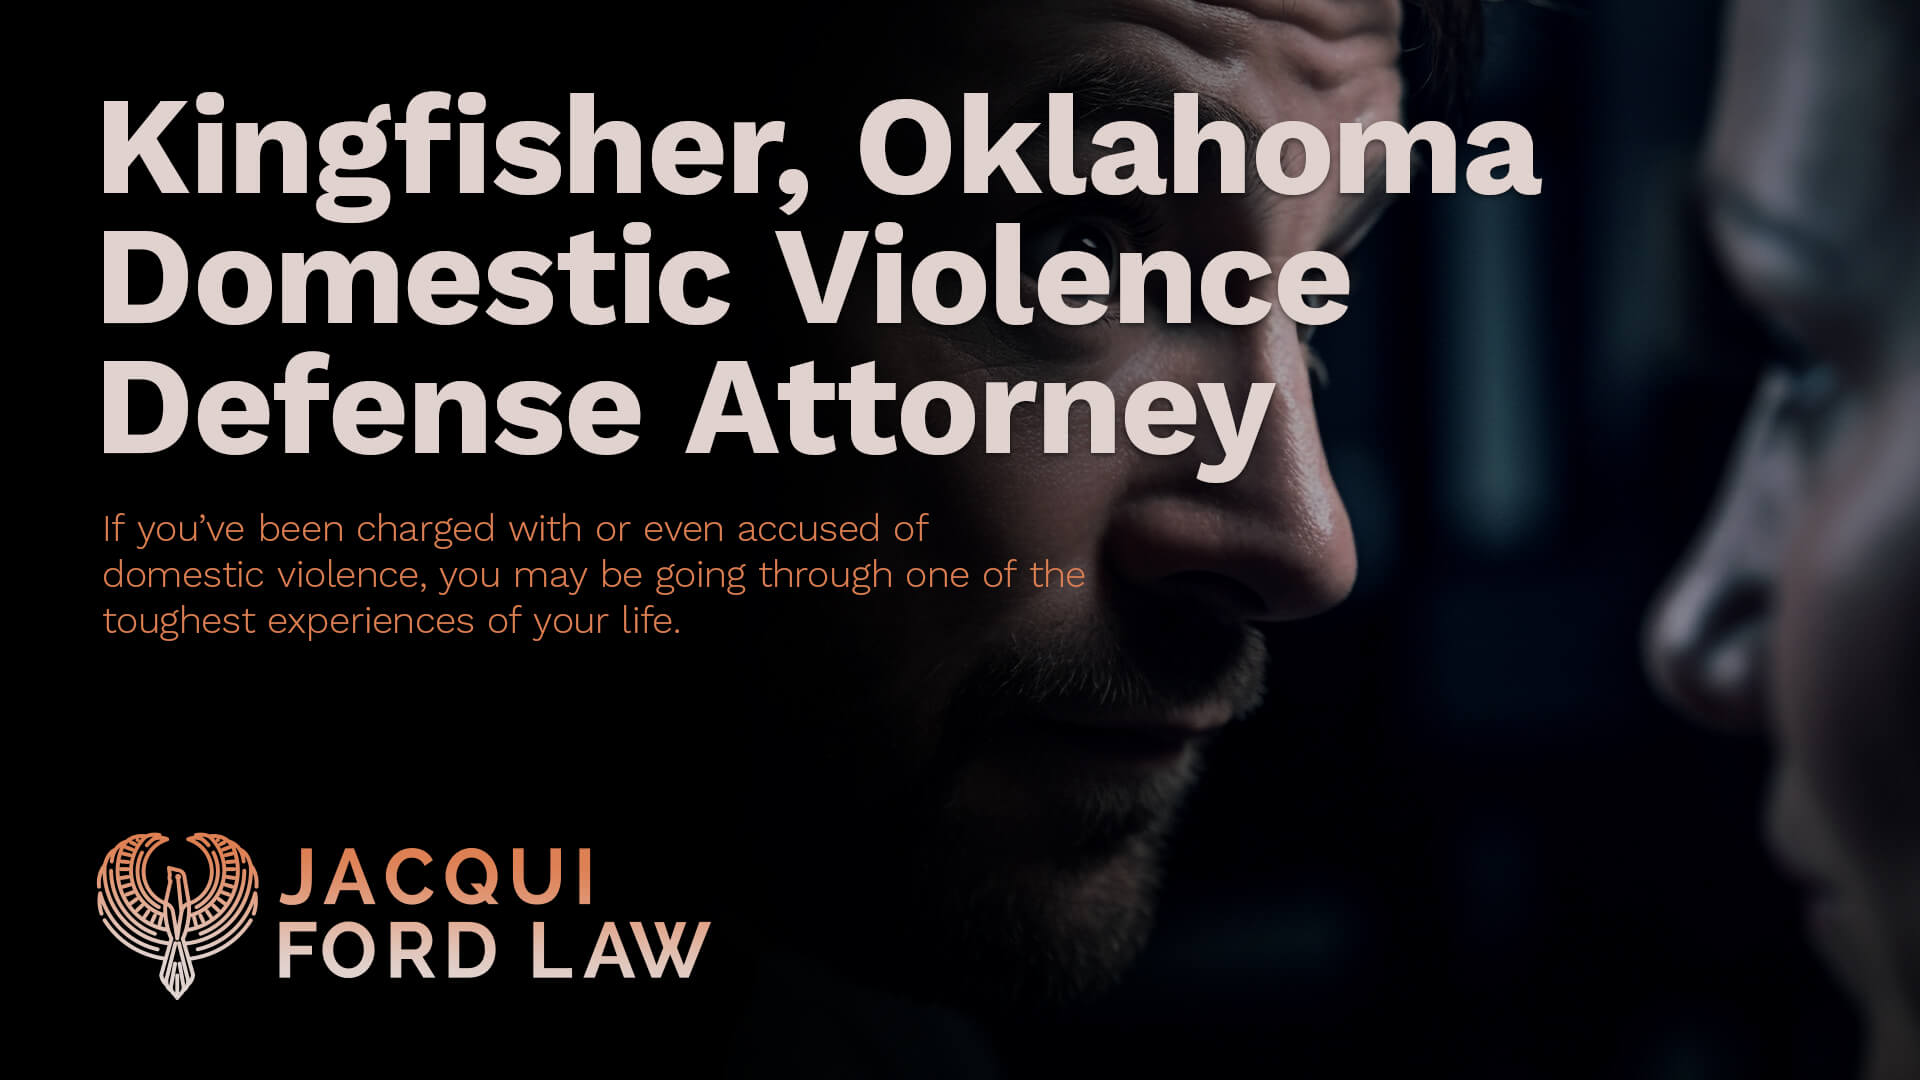 Kingfisher Oklahoma Domestic Violence Defense Attorney - jacqui ford law